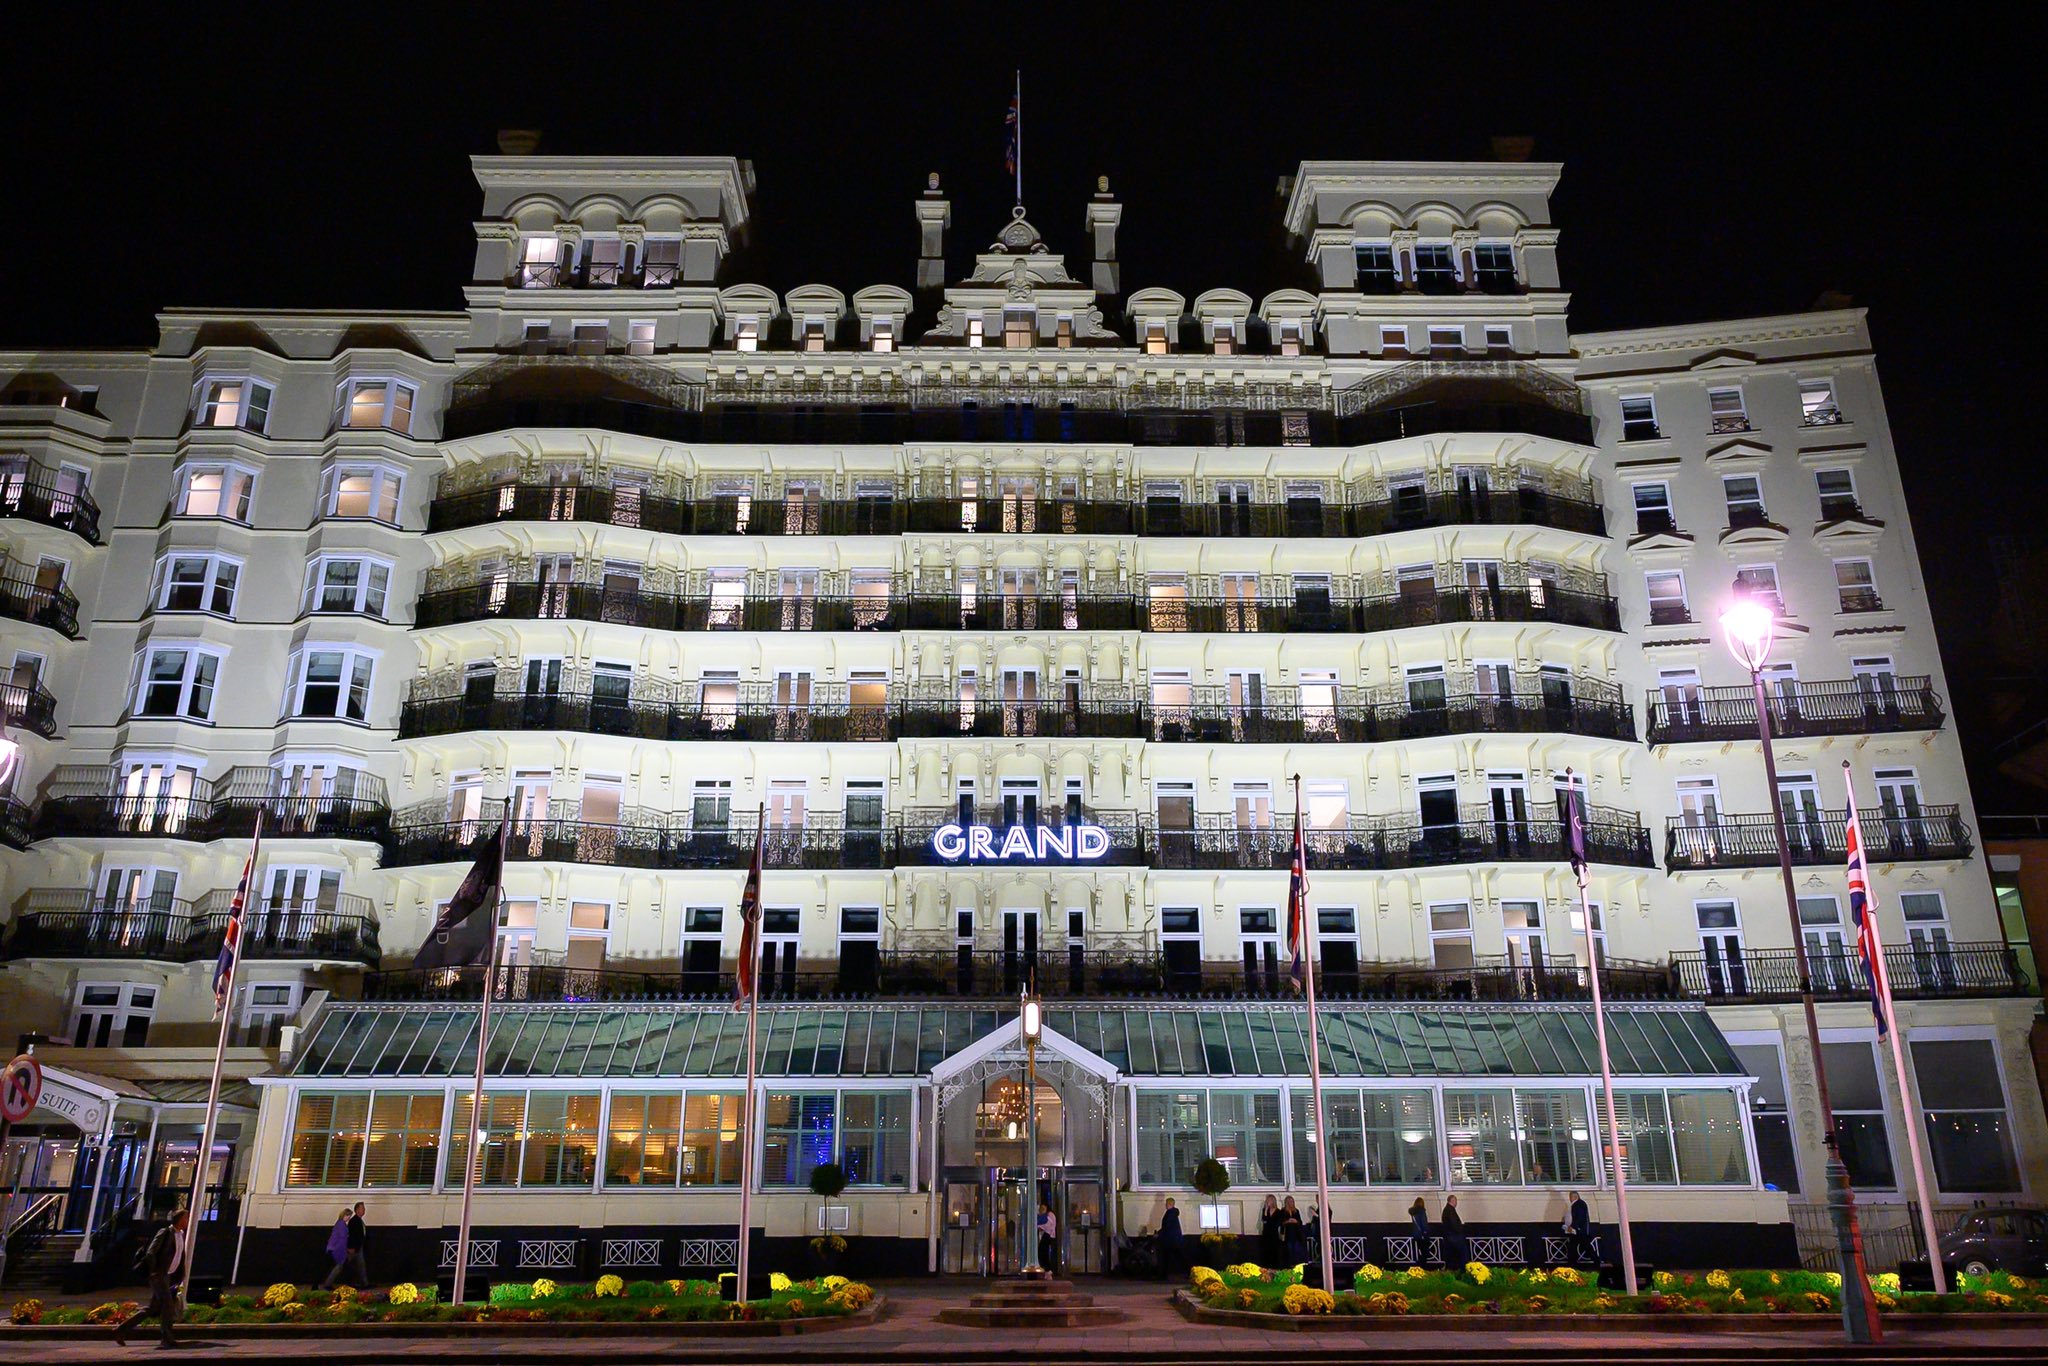 A Grand job for famous Brighton hotel